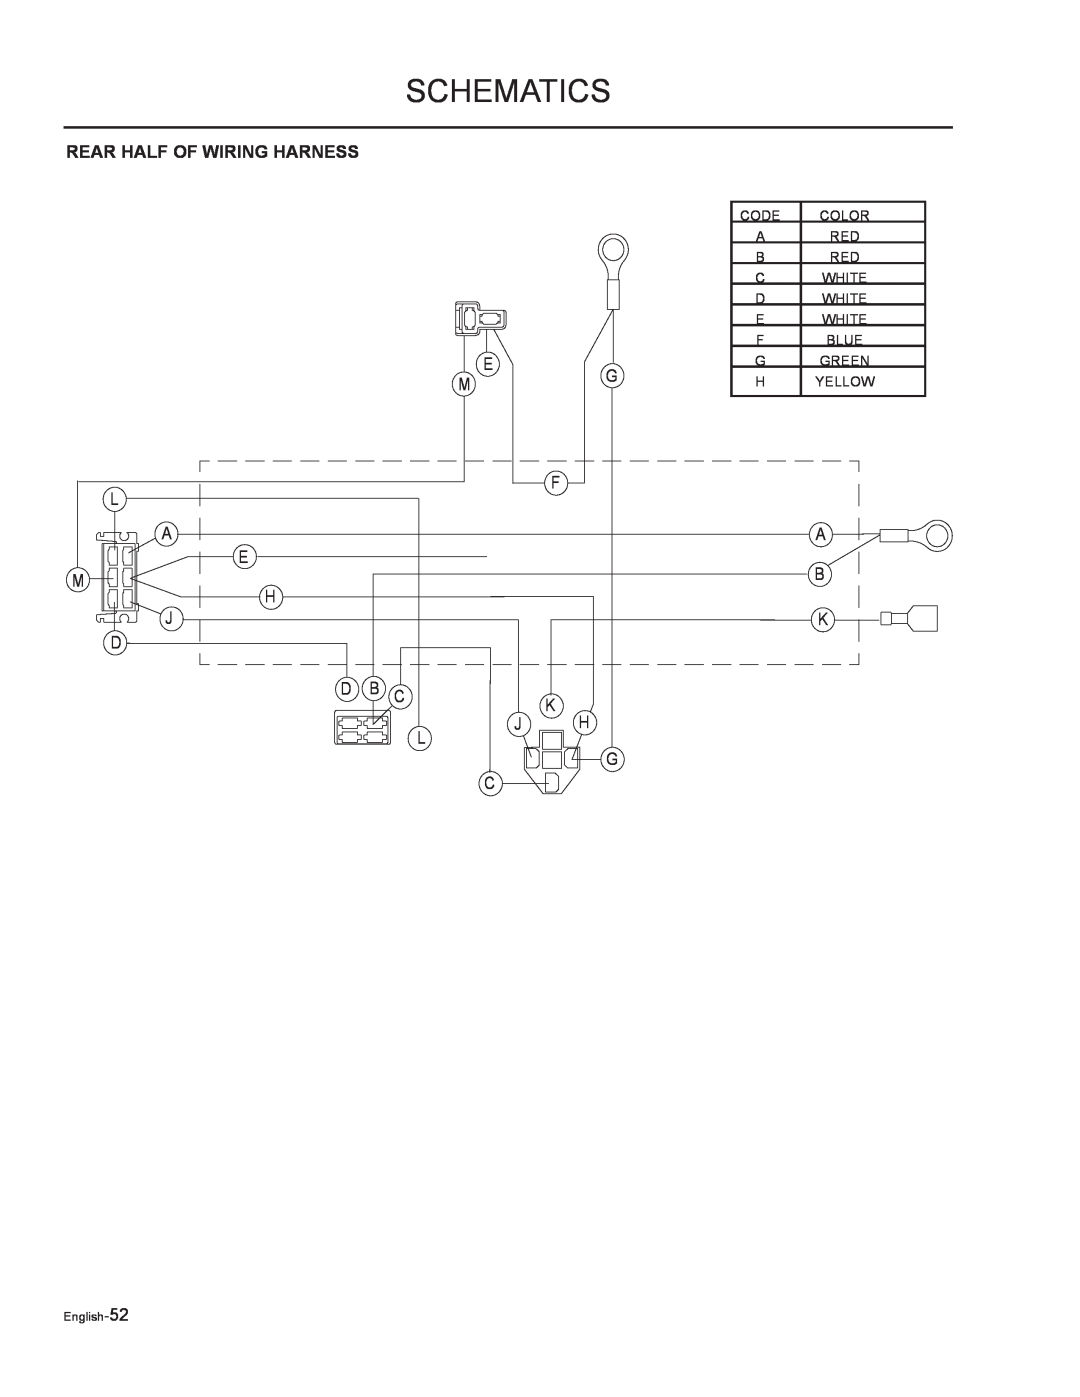 Husqvarna EZF 3417/ 965879301 manual Schematics, Rear Half Of Wiring Harness, English-52 